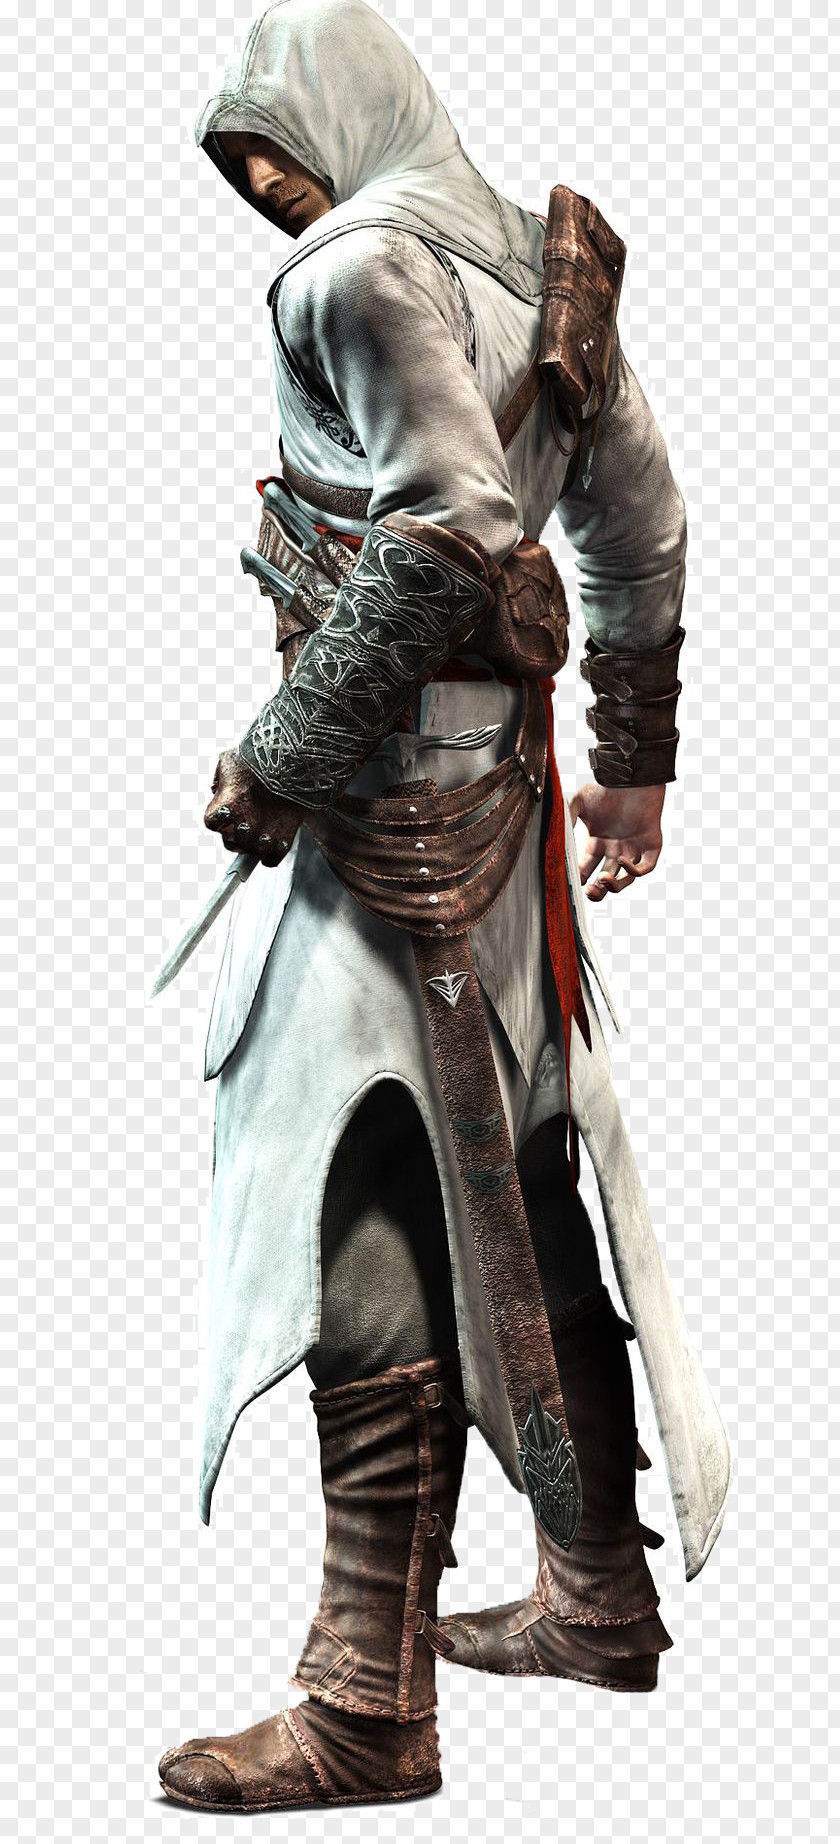 Assassin's Creed Swords III Creed: Bloodlines Ezio Auditore Origins PNG